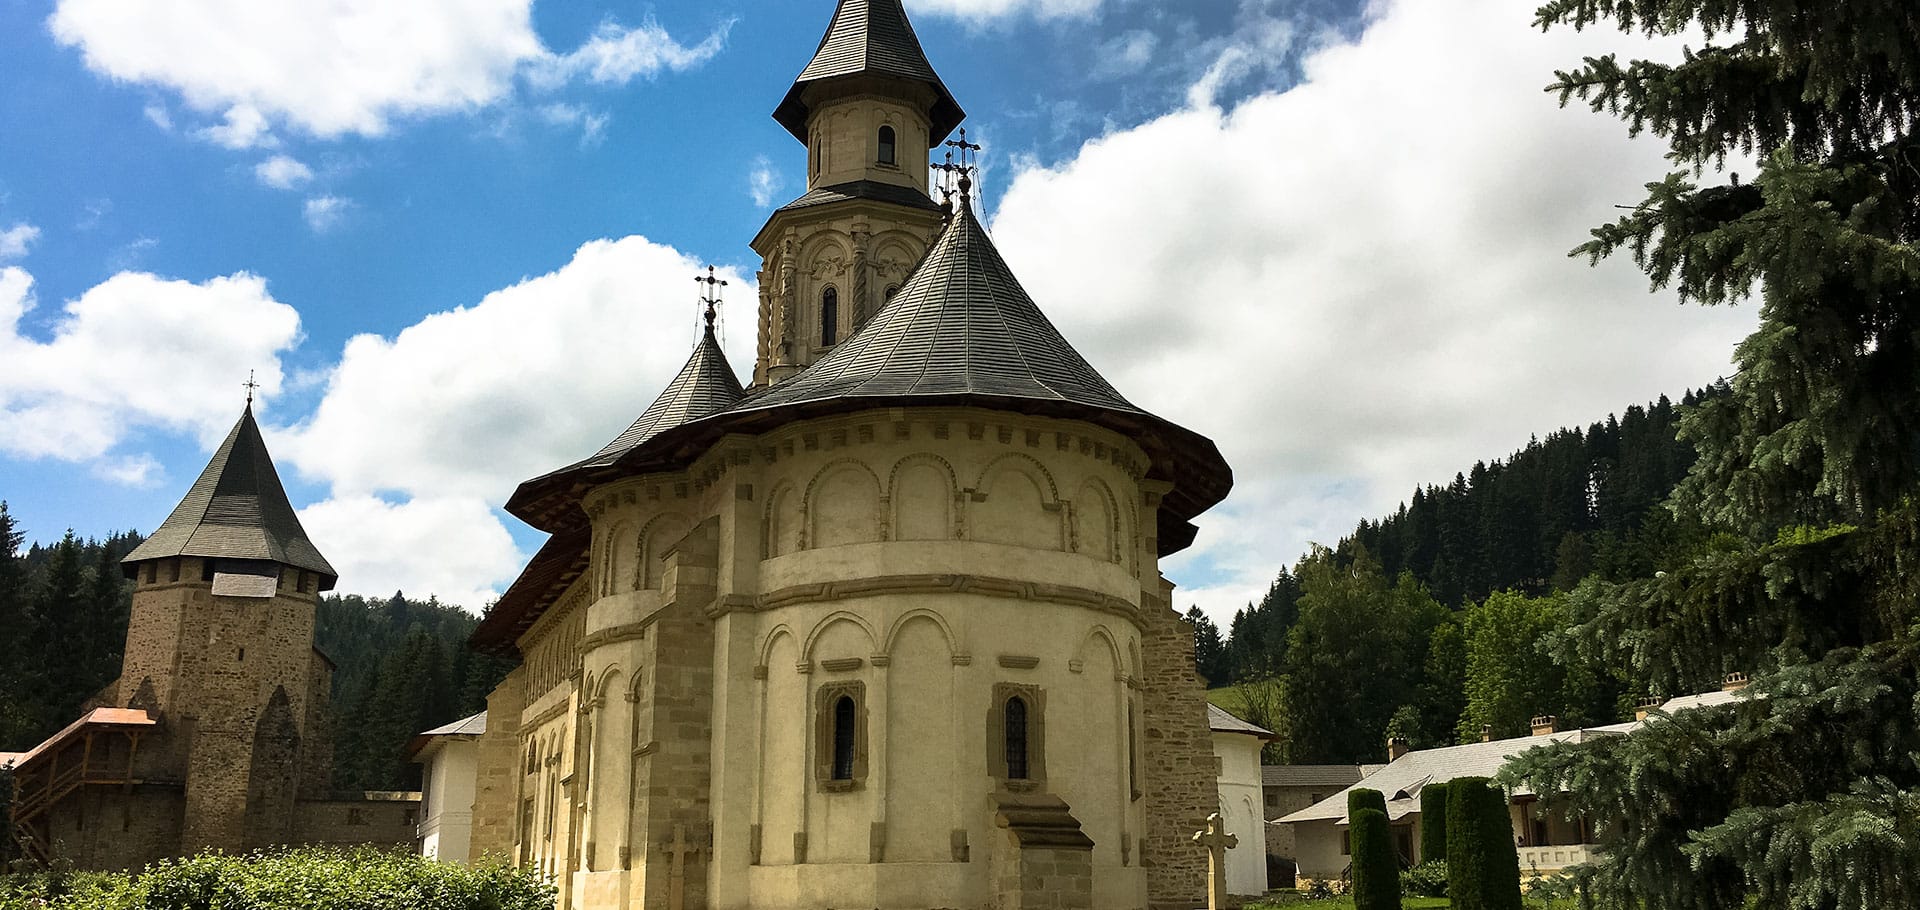 The Putna Monastery